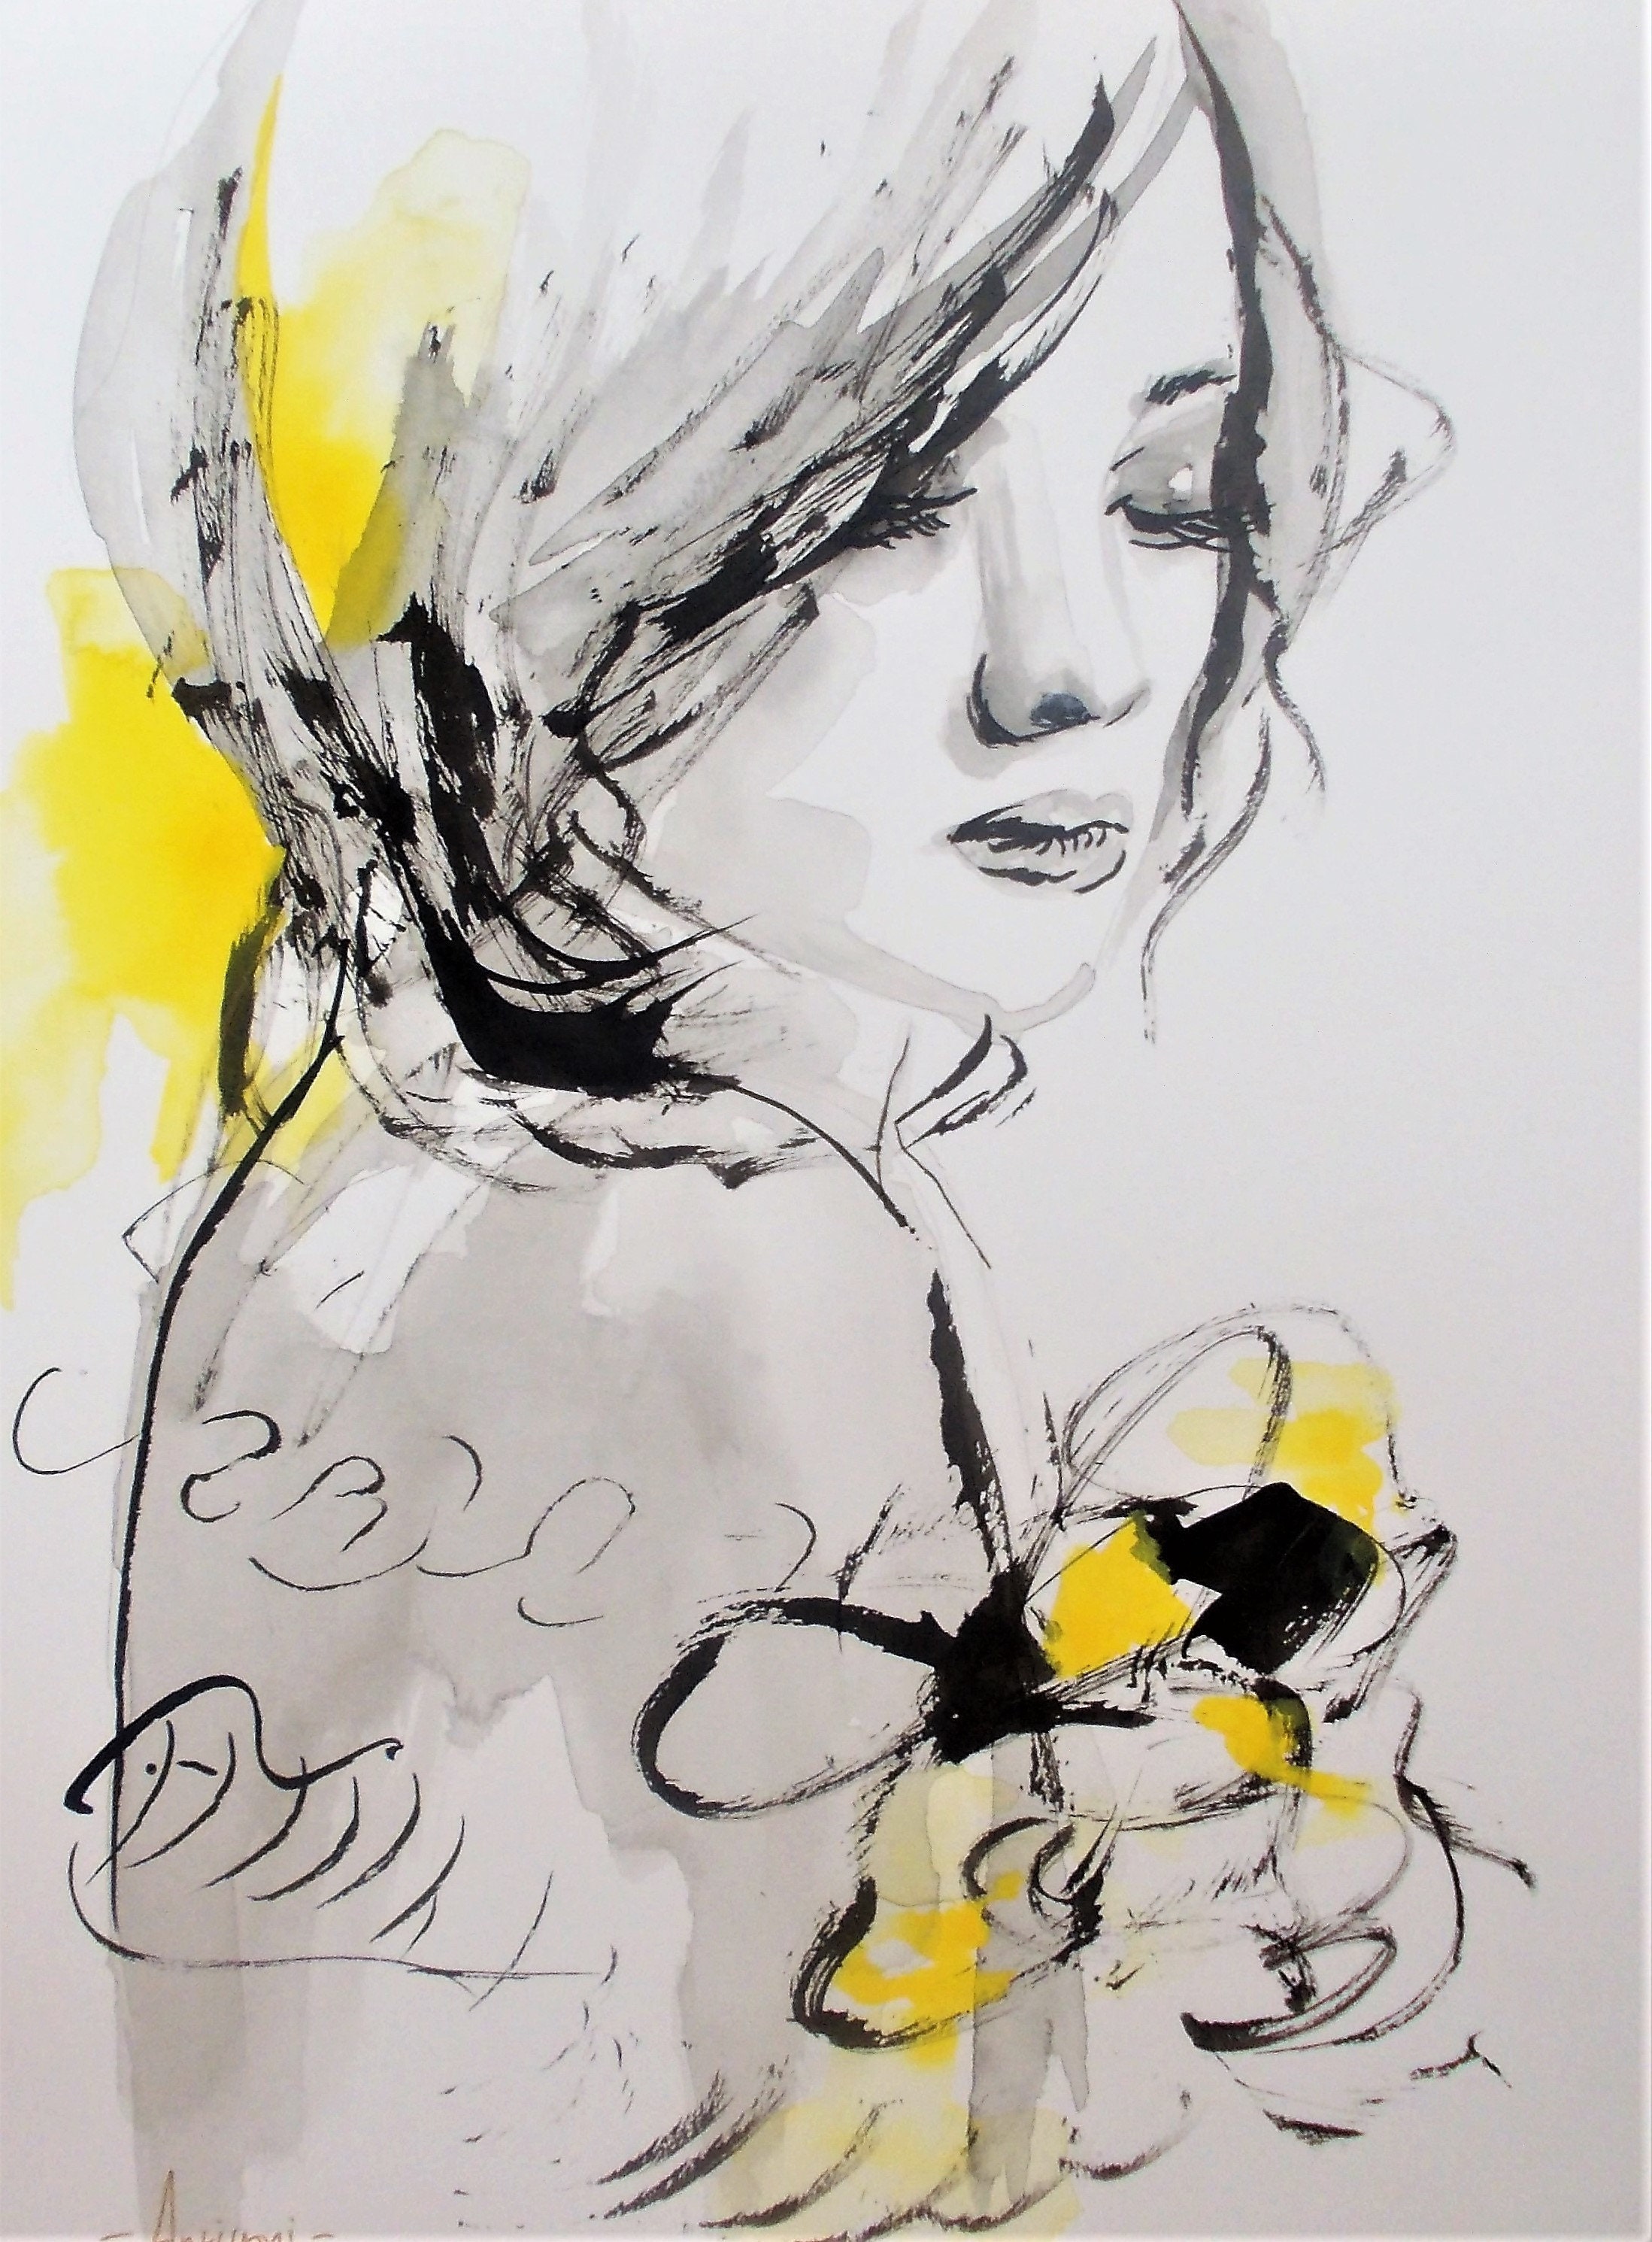 Woman drawing,figurative drawing,woman ink drawing,black and white drawing,drawing wall art,drawing wall decor,abstract drawing figure,ink